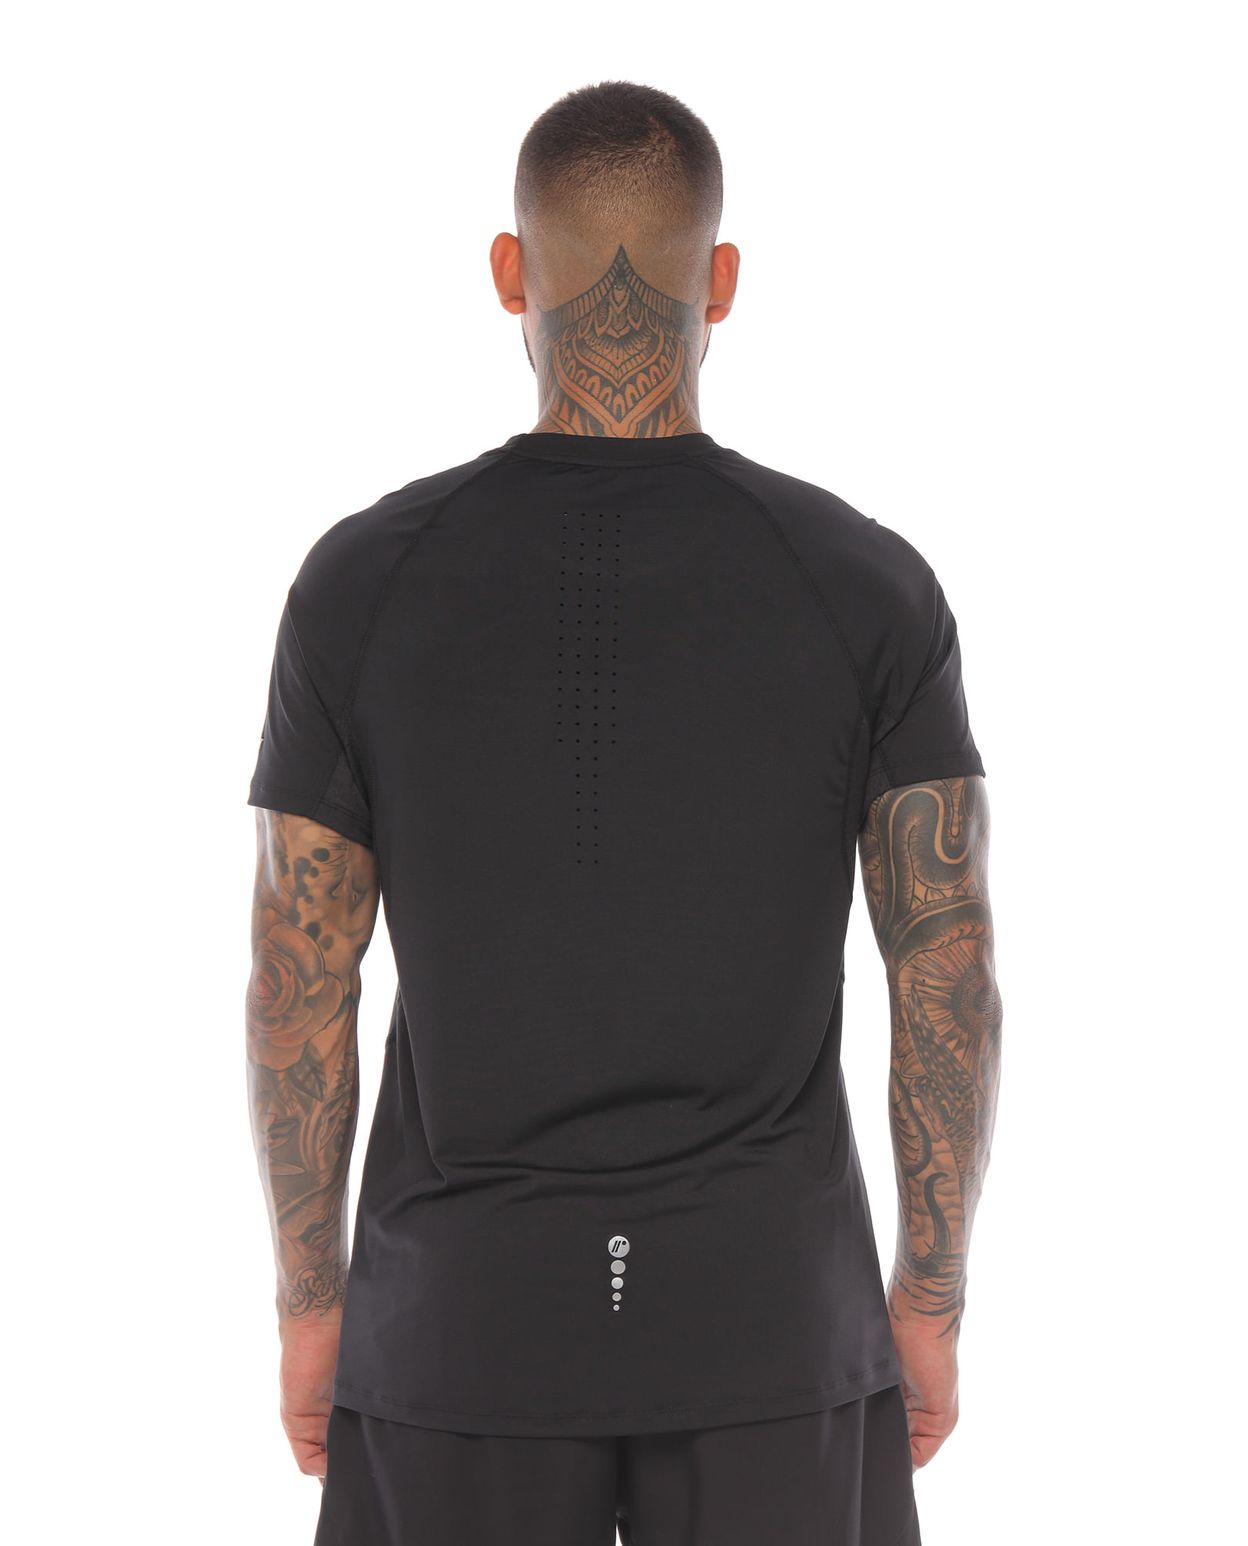 camiseta deportiva manga corta color negro para hombre parte trasera